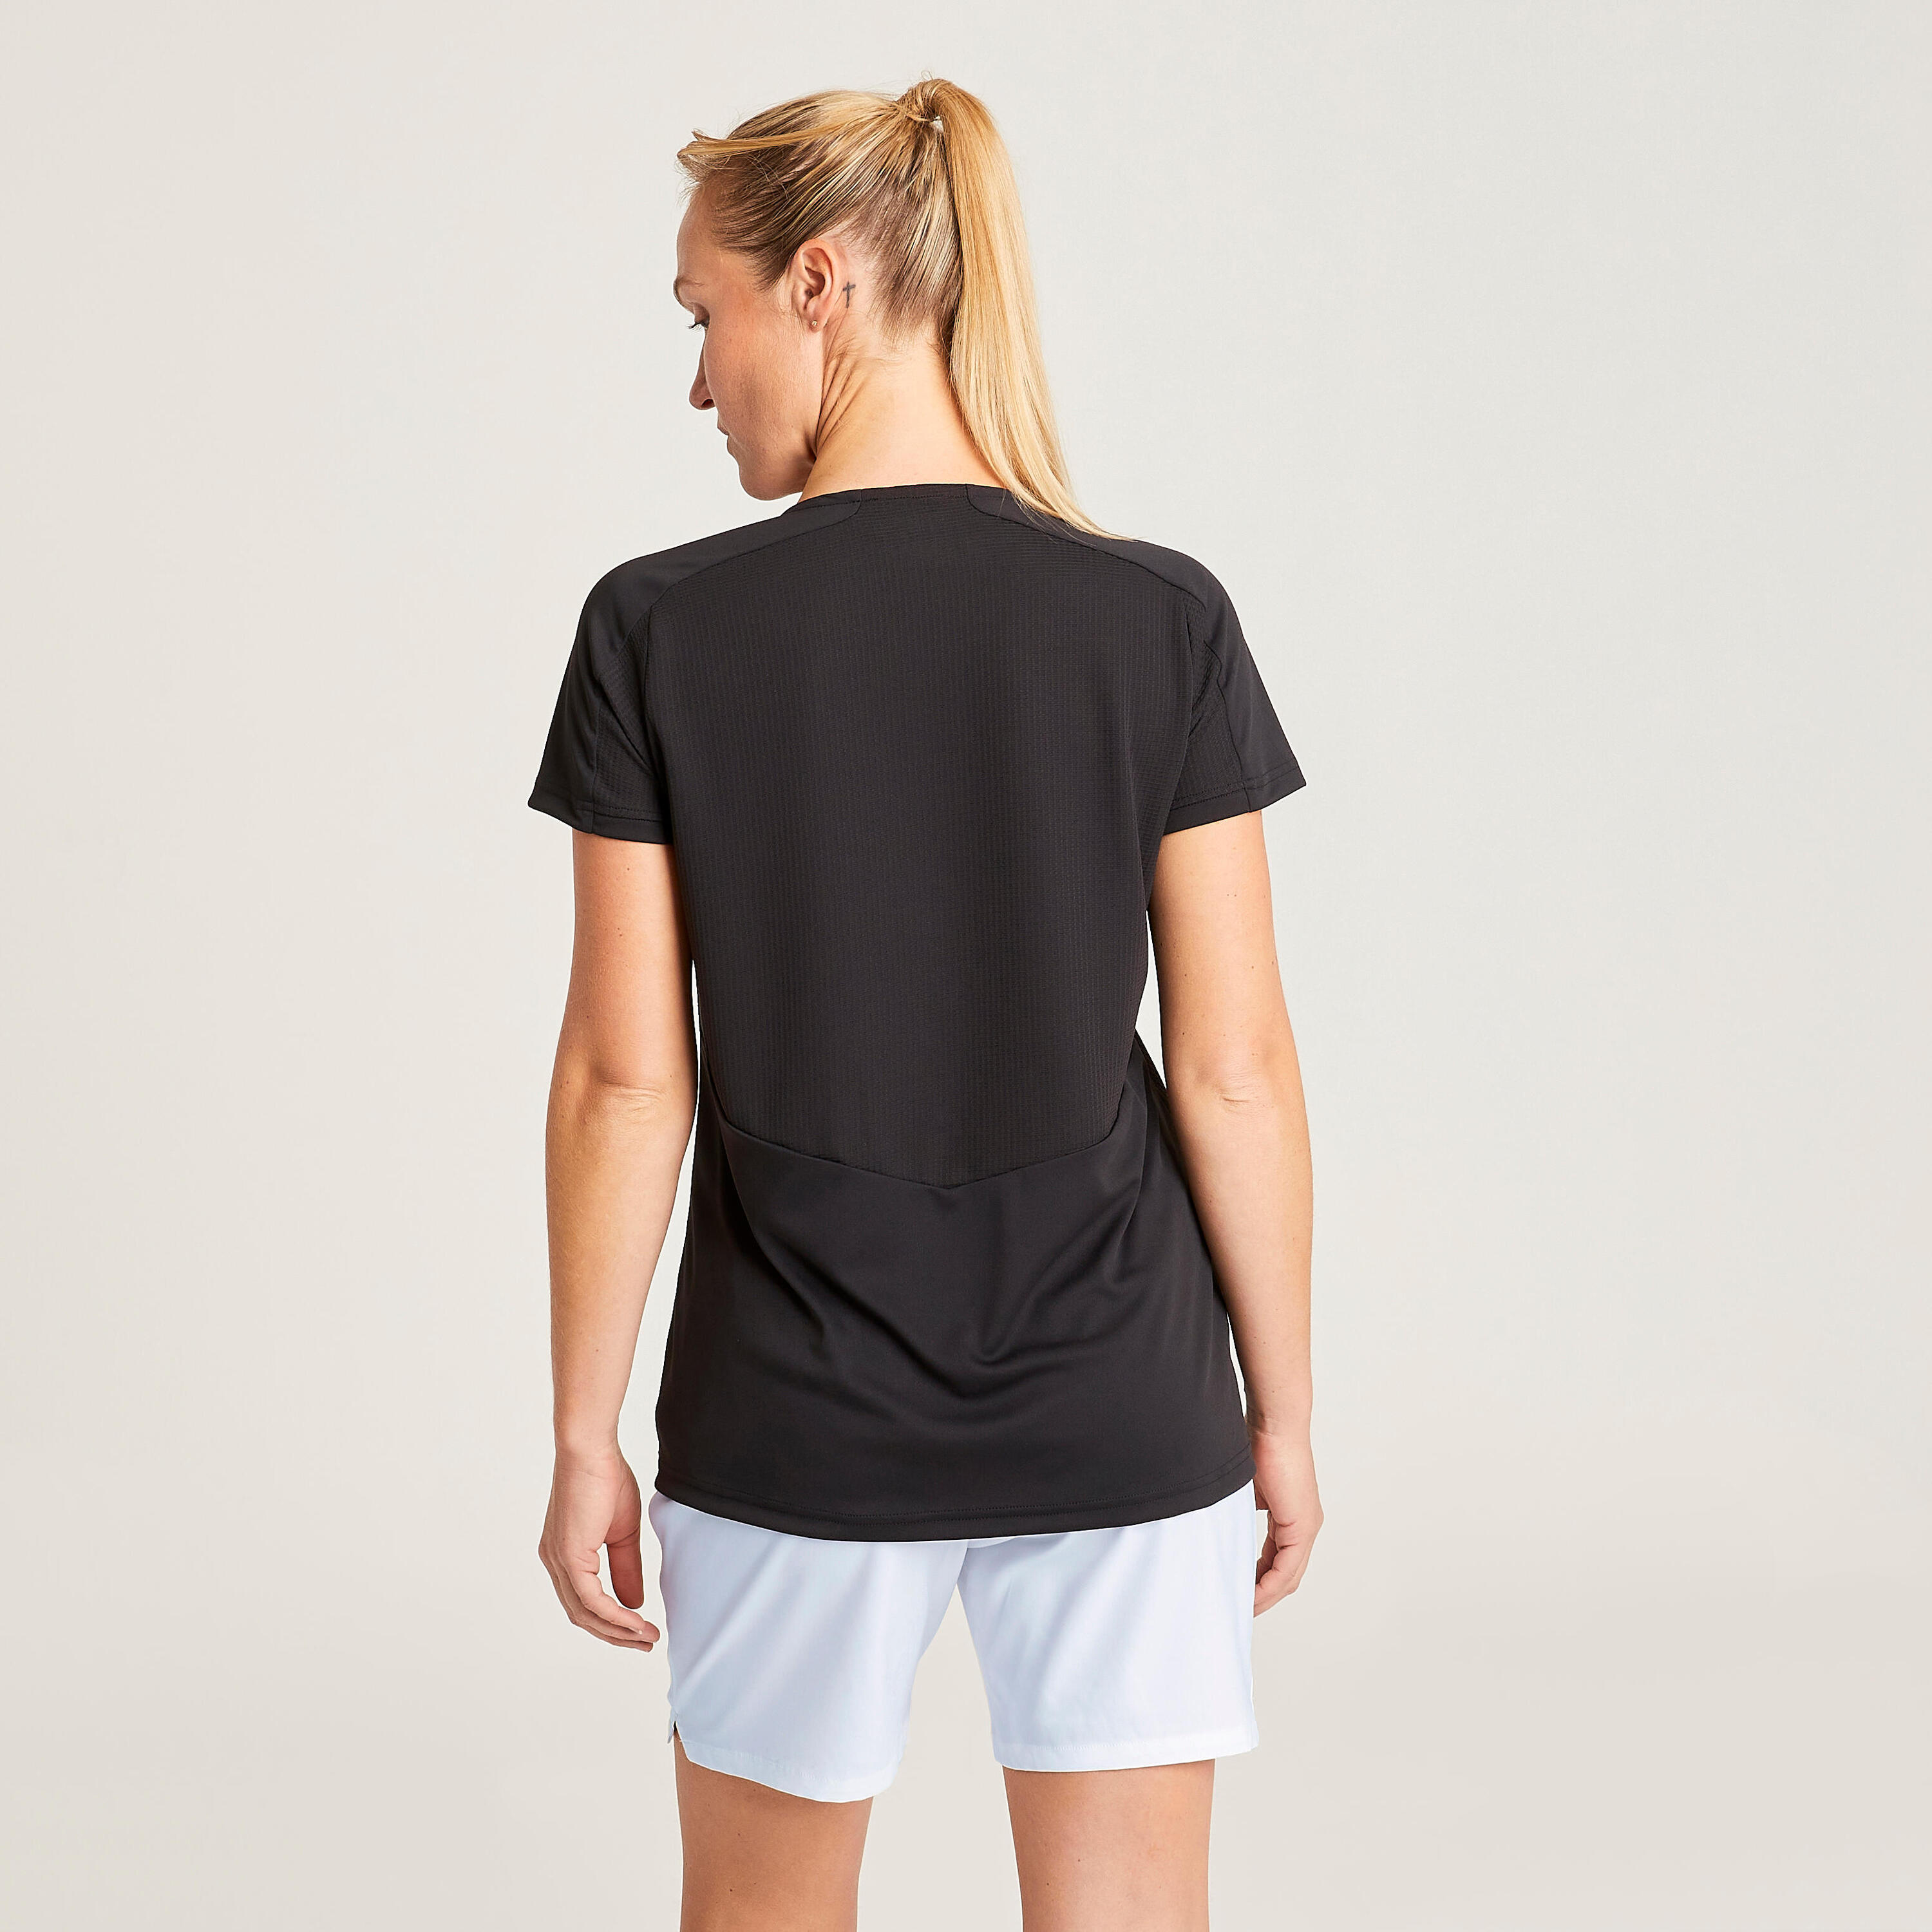 Women's Plain Football Shirt - Black 20/29